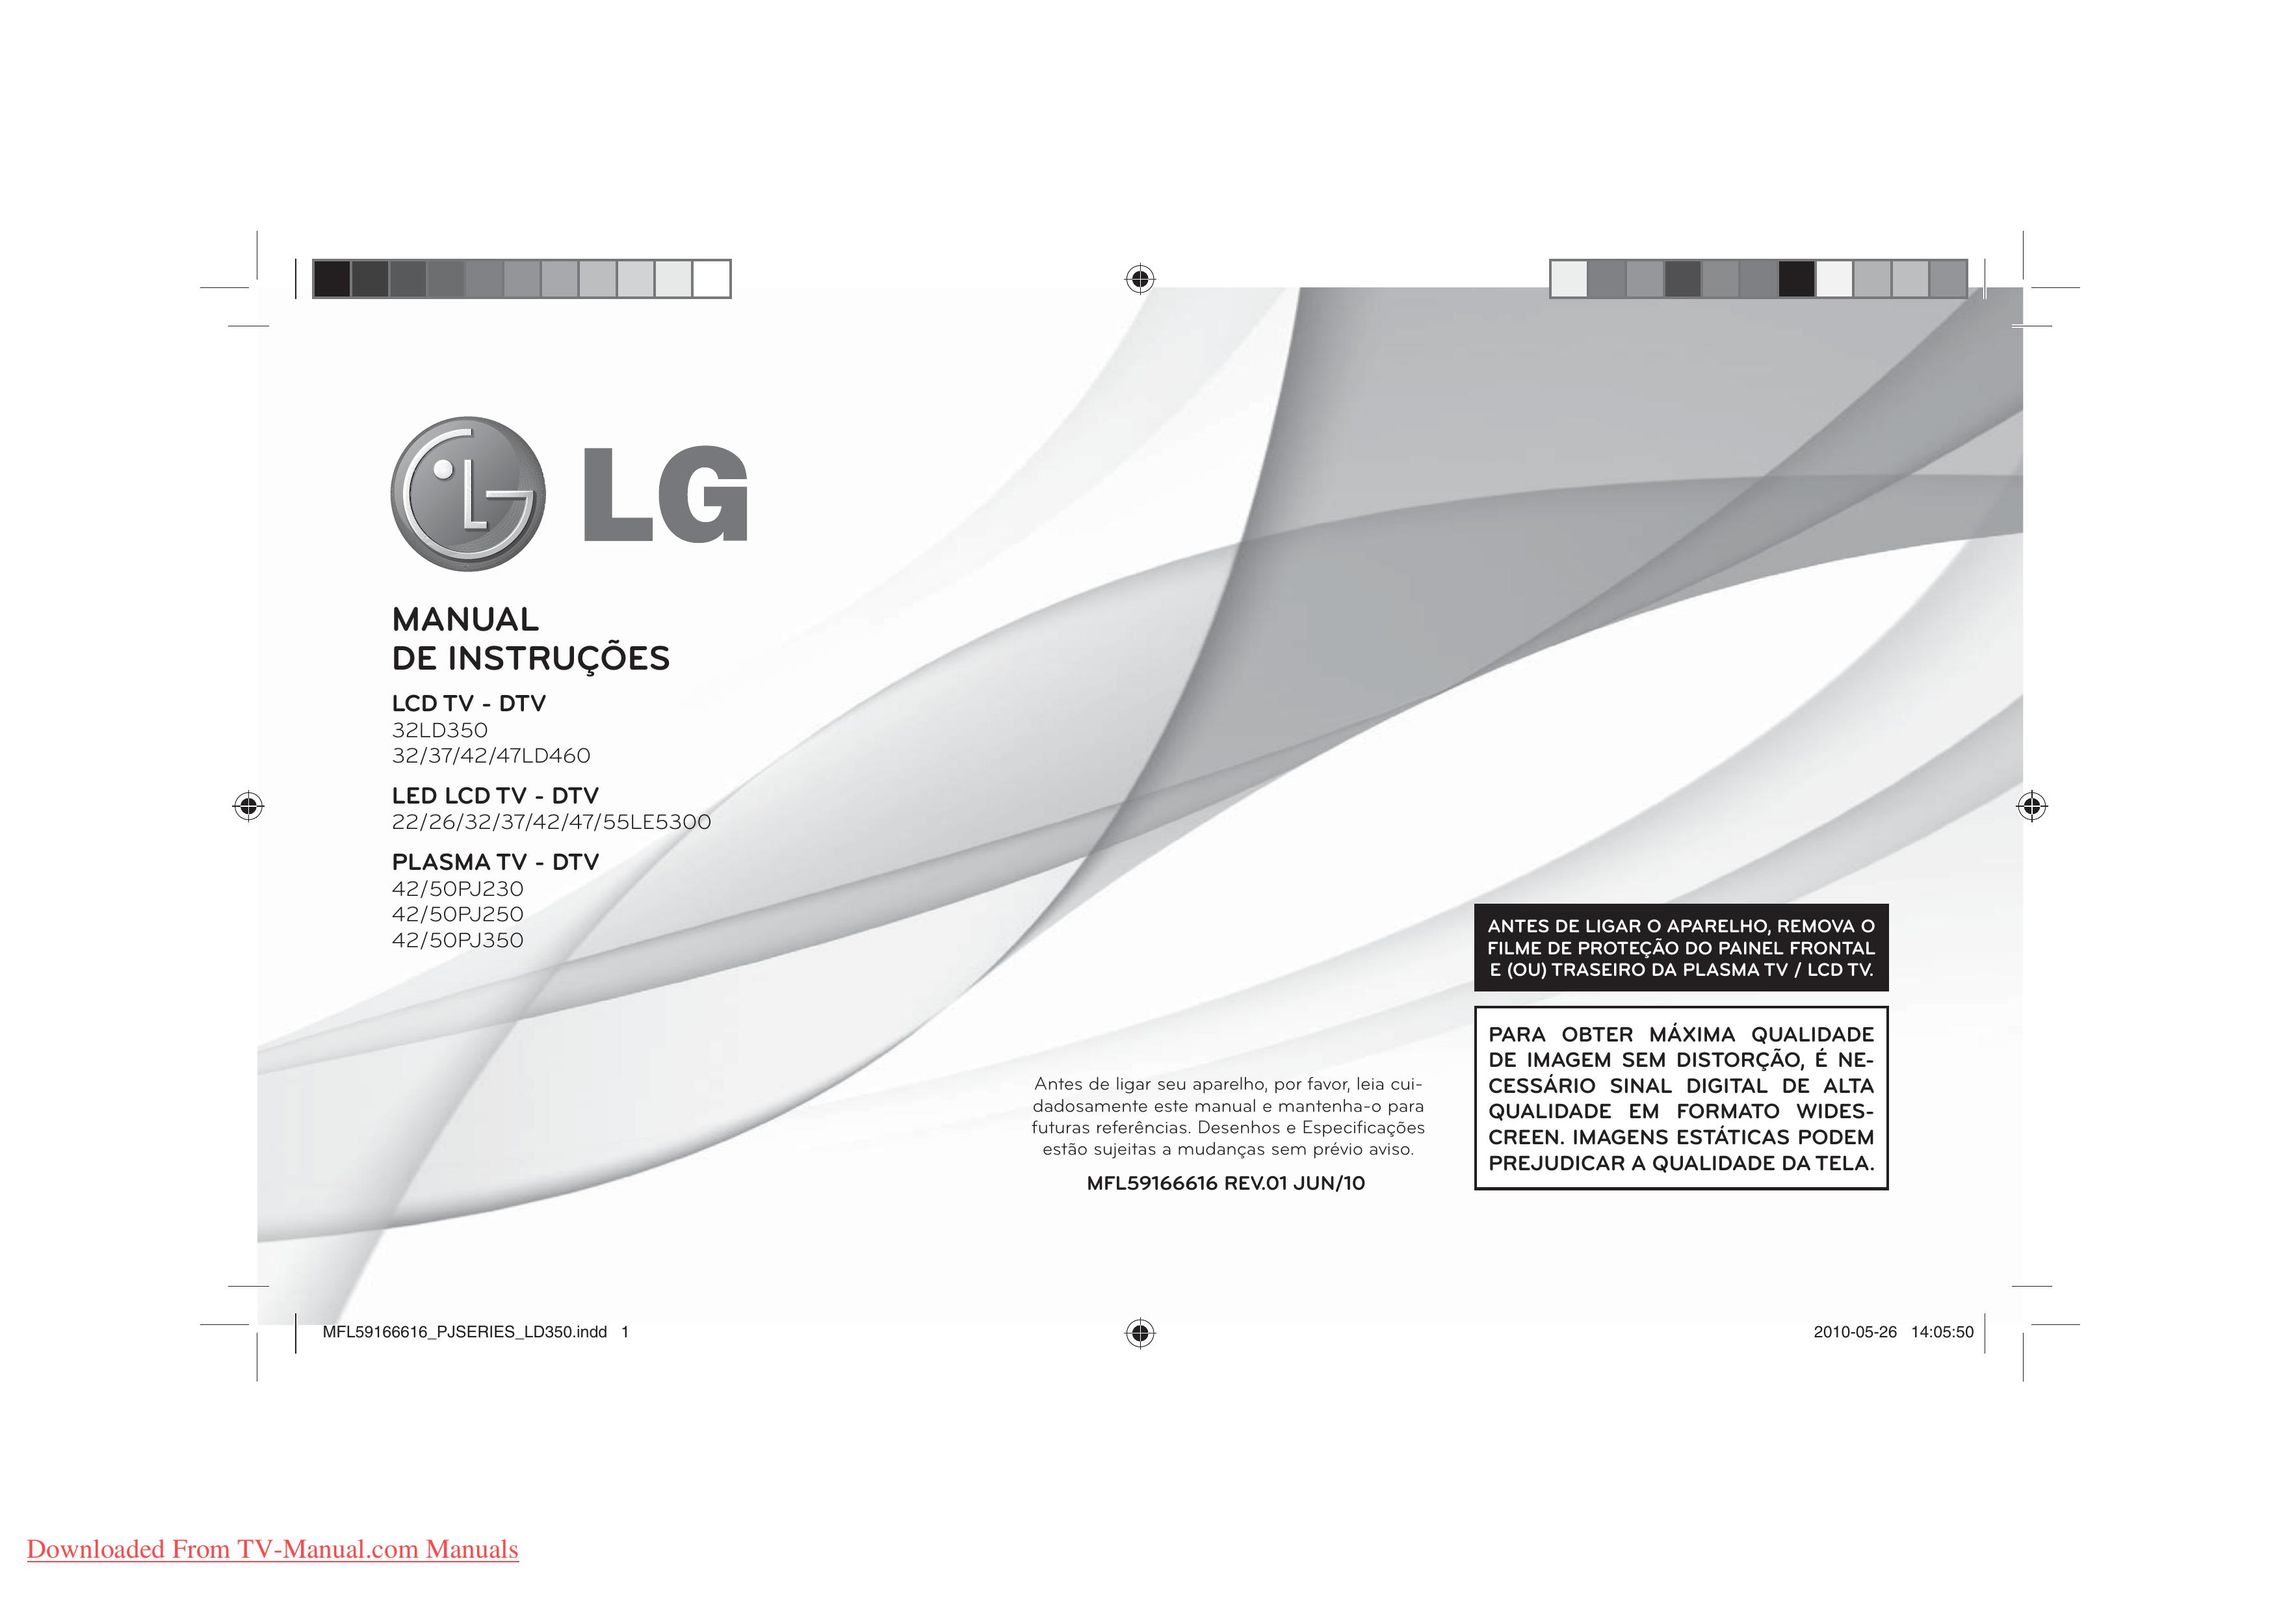 LG Electronics 32LD460 CRT Television User Manual